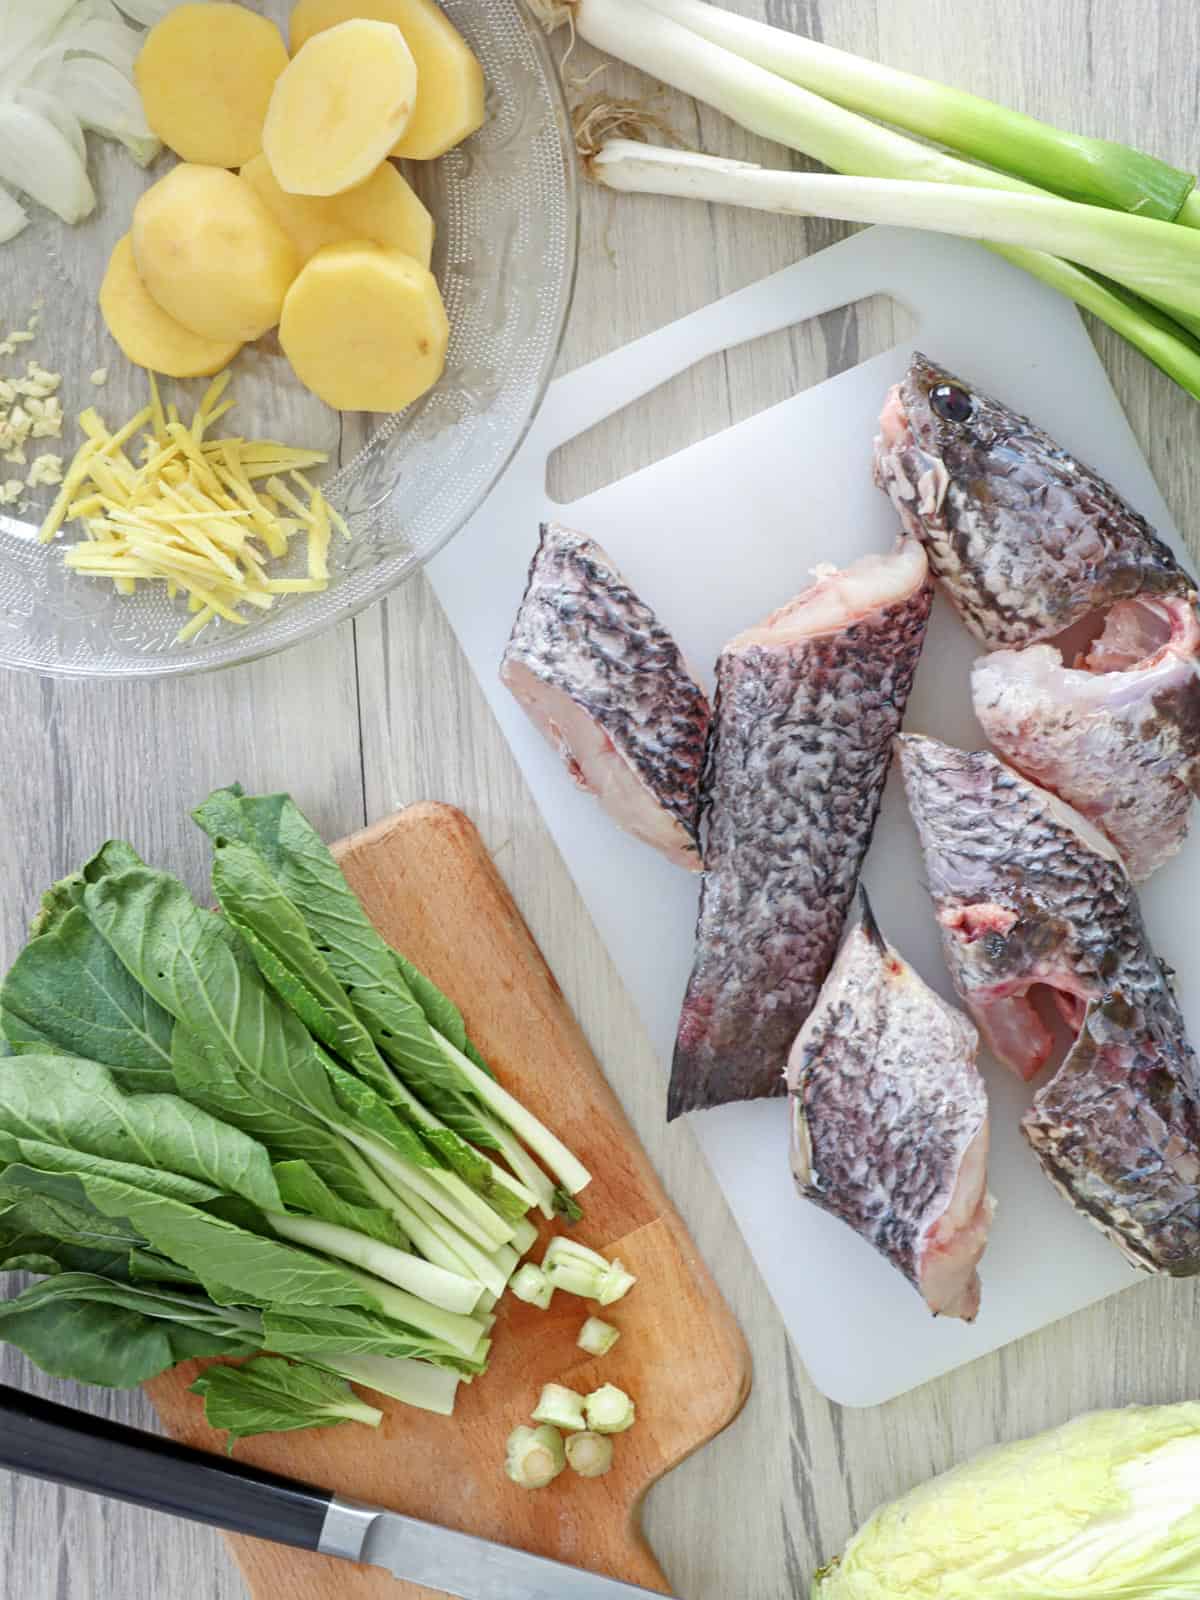 raw mudfish and vegetables to make pesang isda